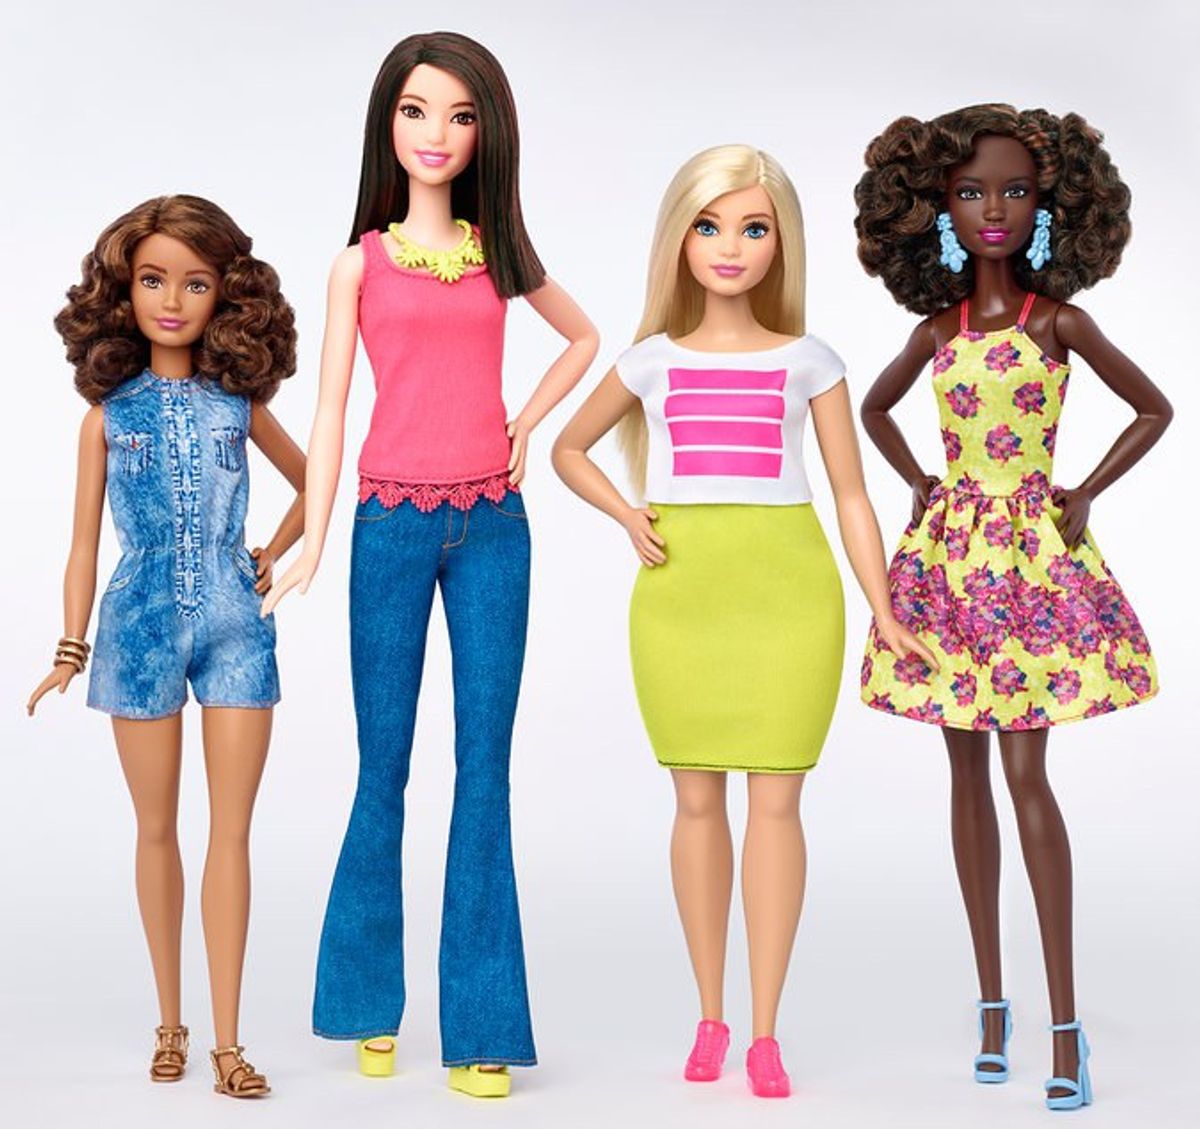 Let's Stop Blaming Barbie for Low Self-Esteem